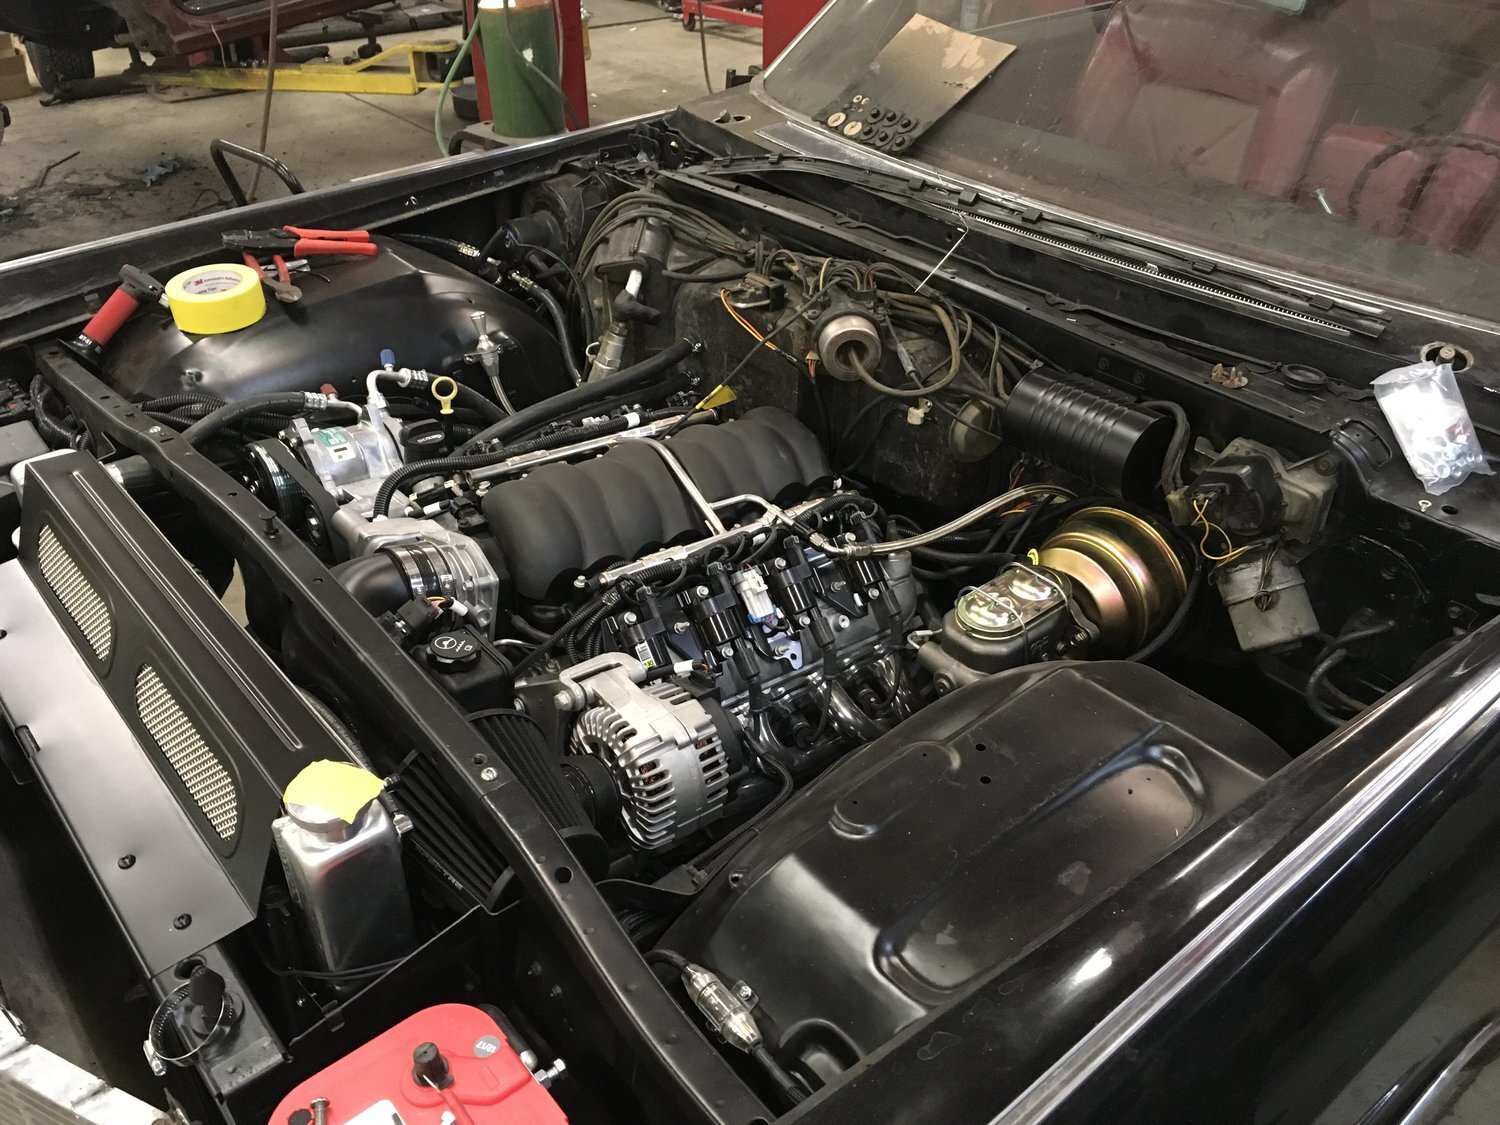 1965-cadillac-engine-minneapolis-car-restoration-hot-rod-factory(4).jpeg